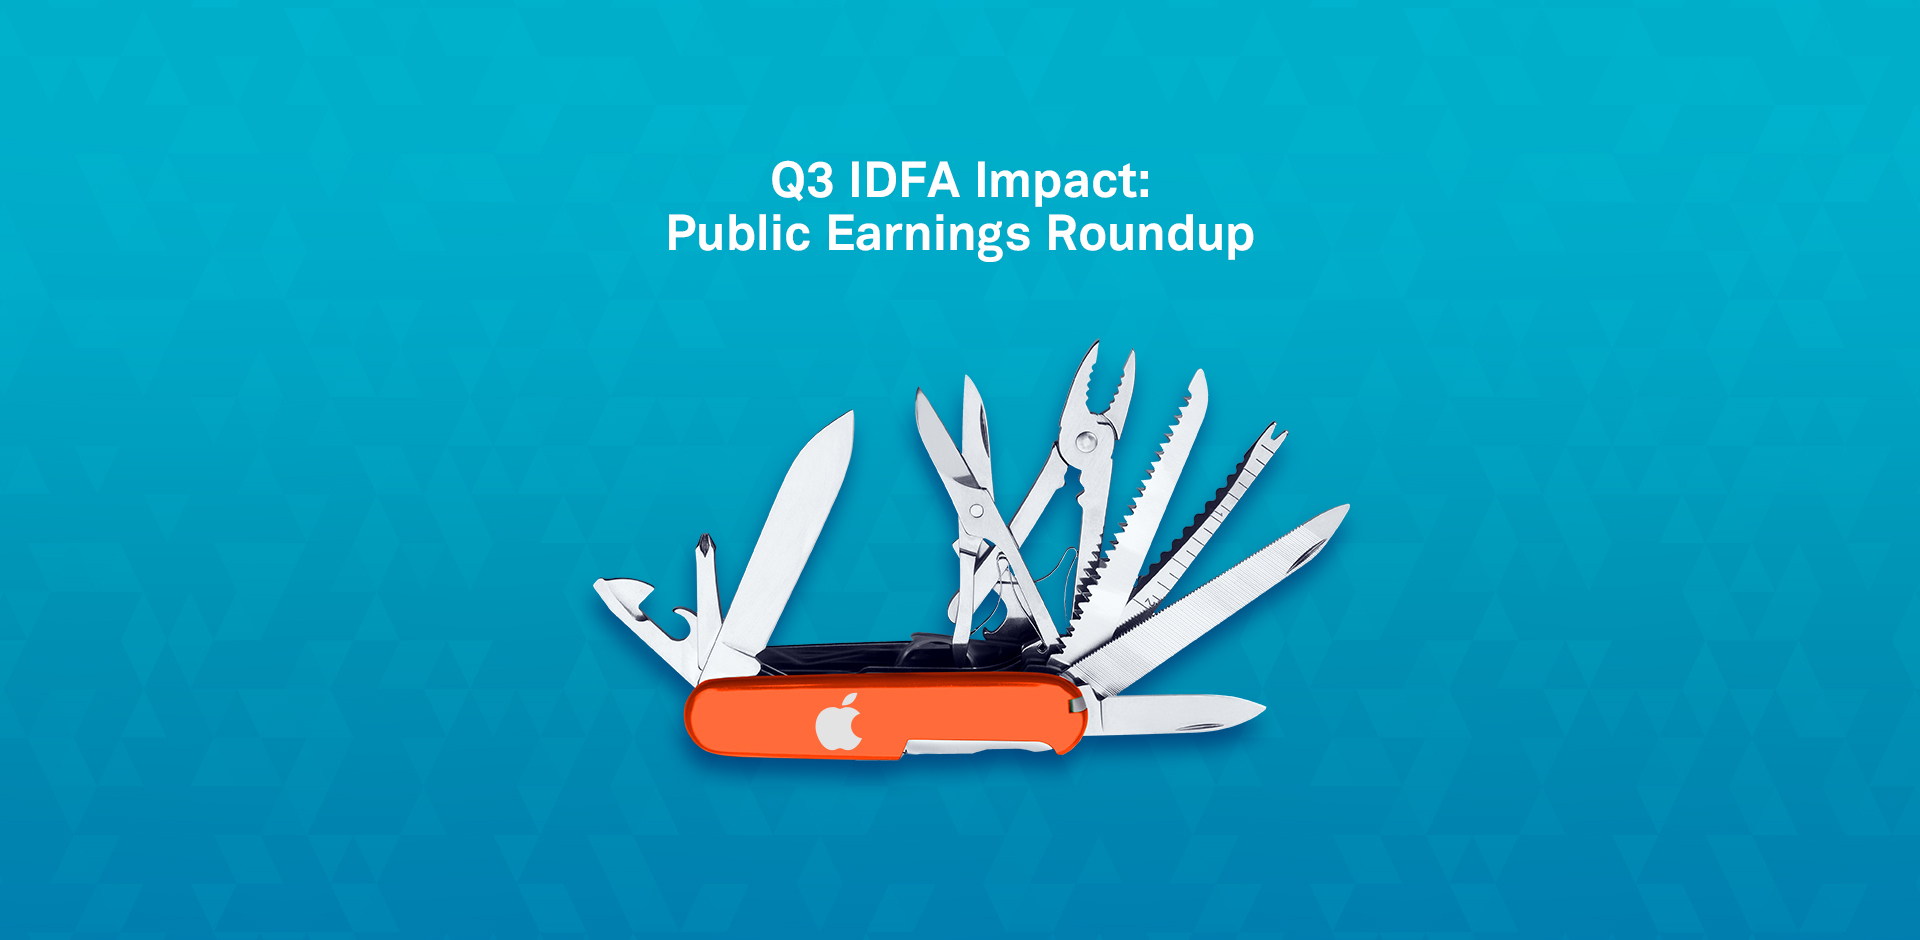 Q3 IDFA Impact: Public Earnings Roundup